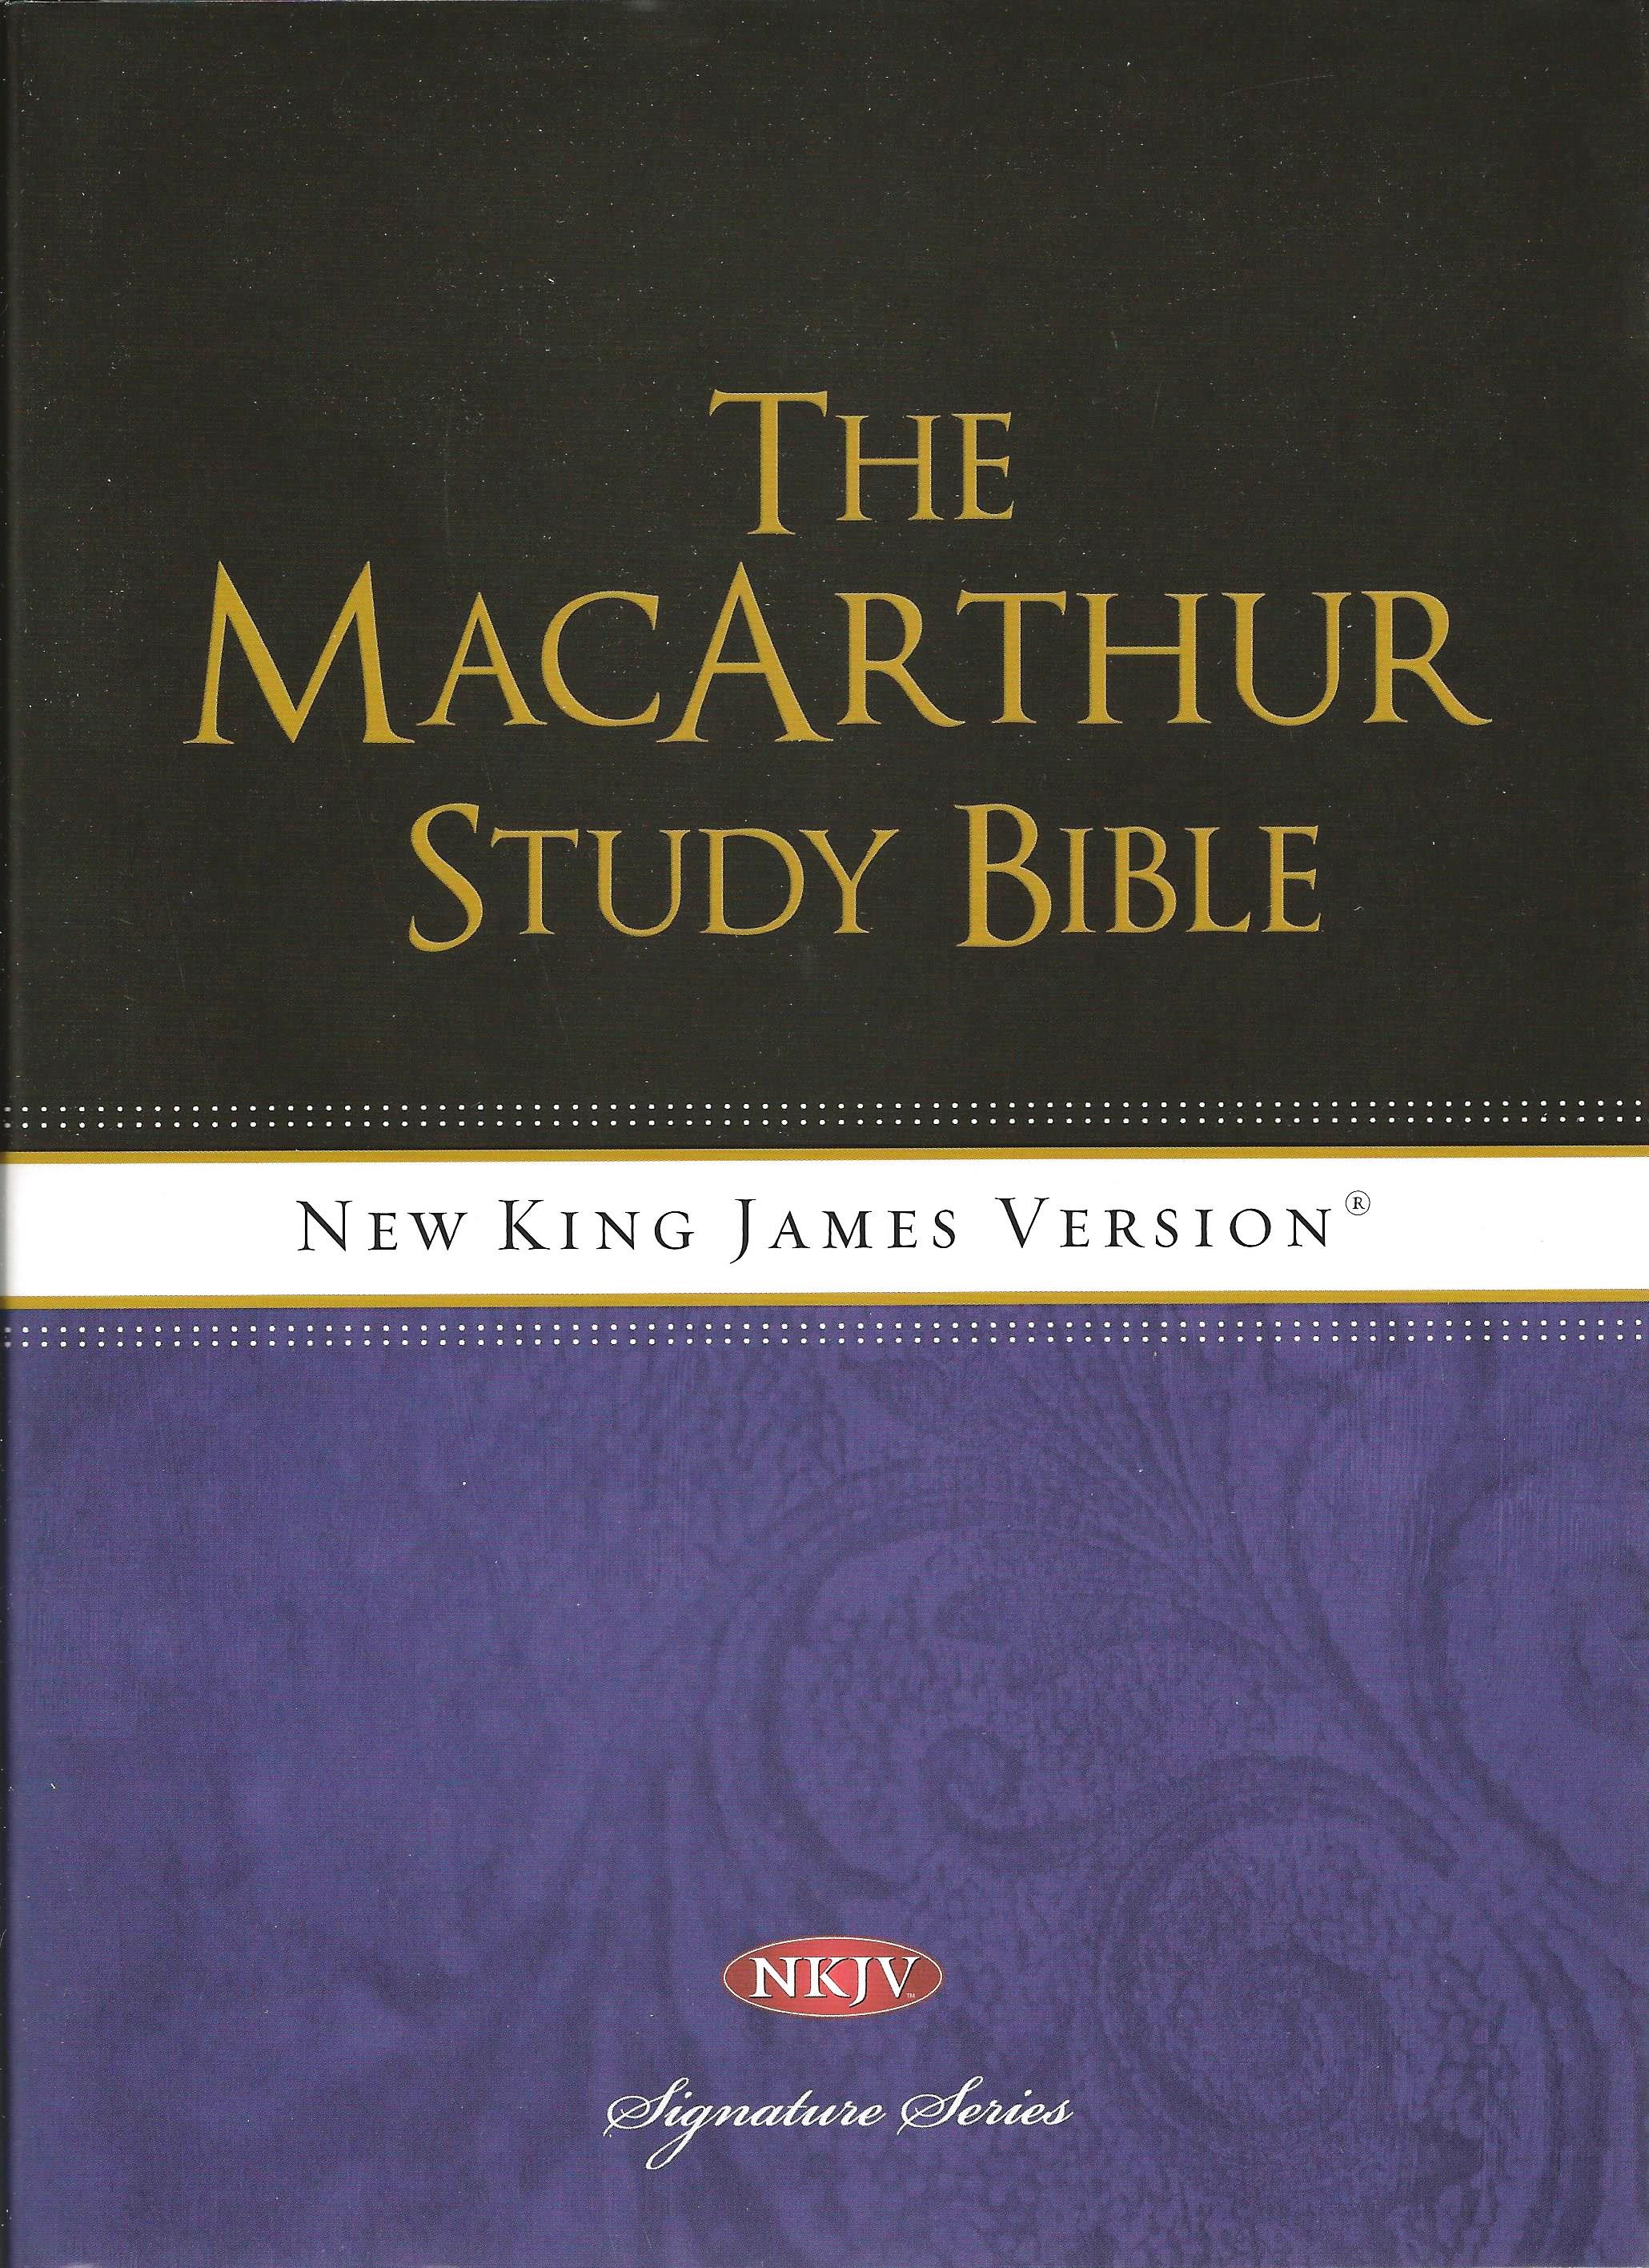 NKJV MACARTHUR STUDY BIBLE Hardcover